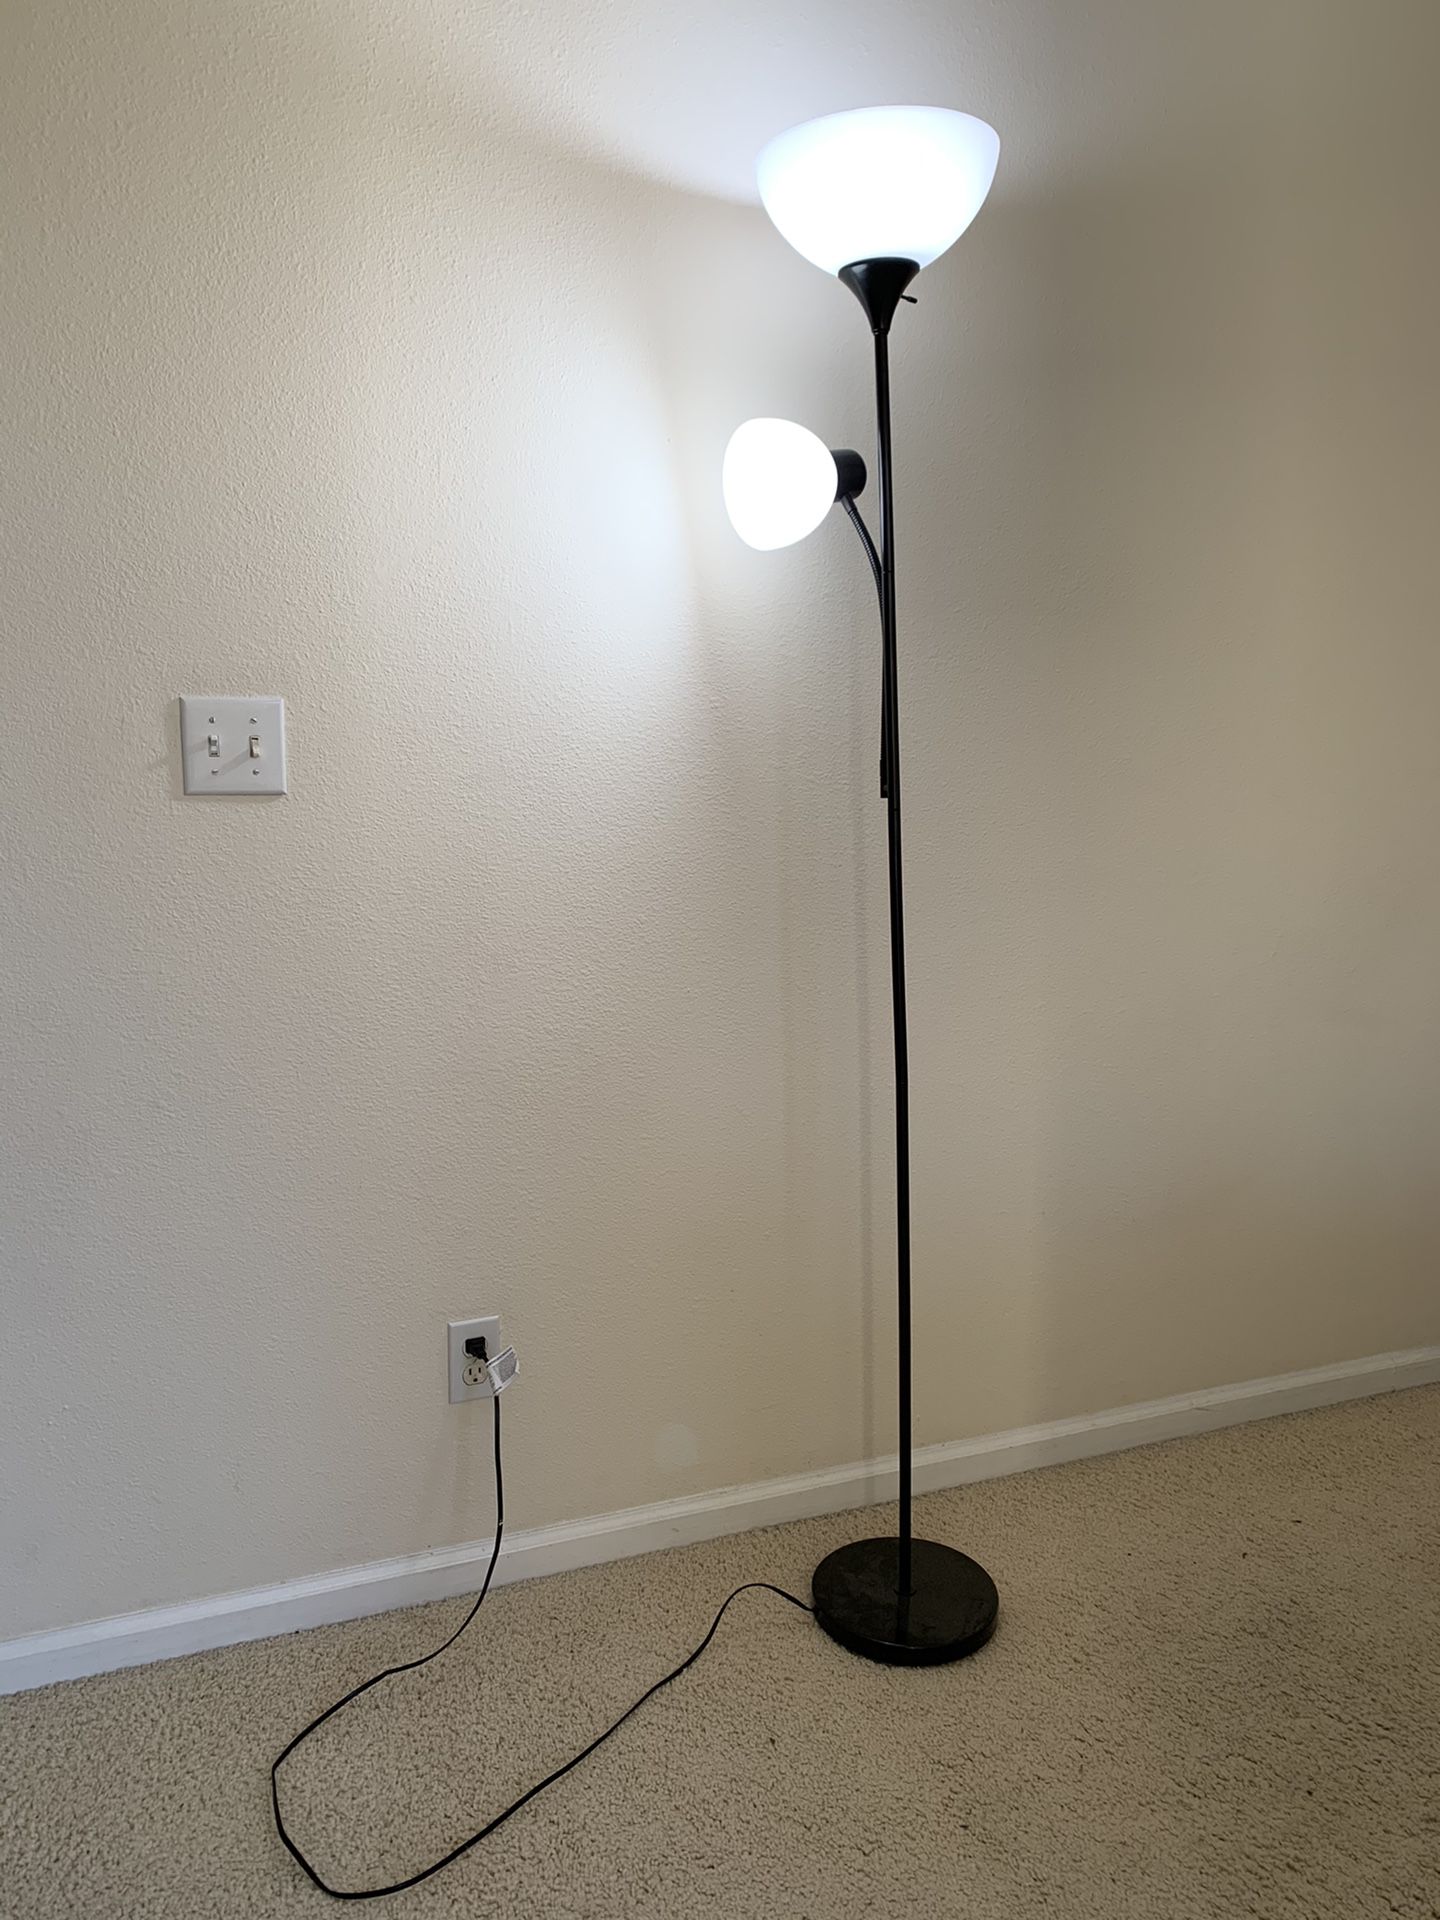 Floor lamp, 71 x 20.47 x 11.35 inches, Black